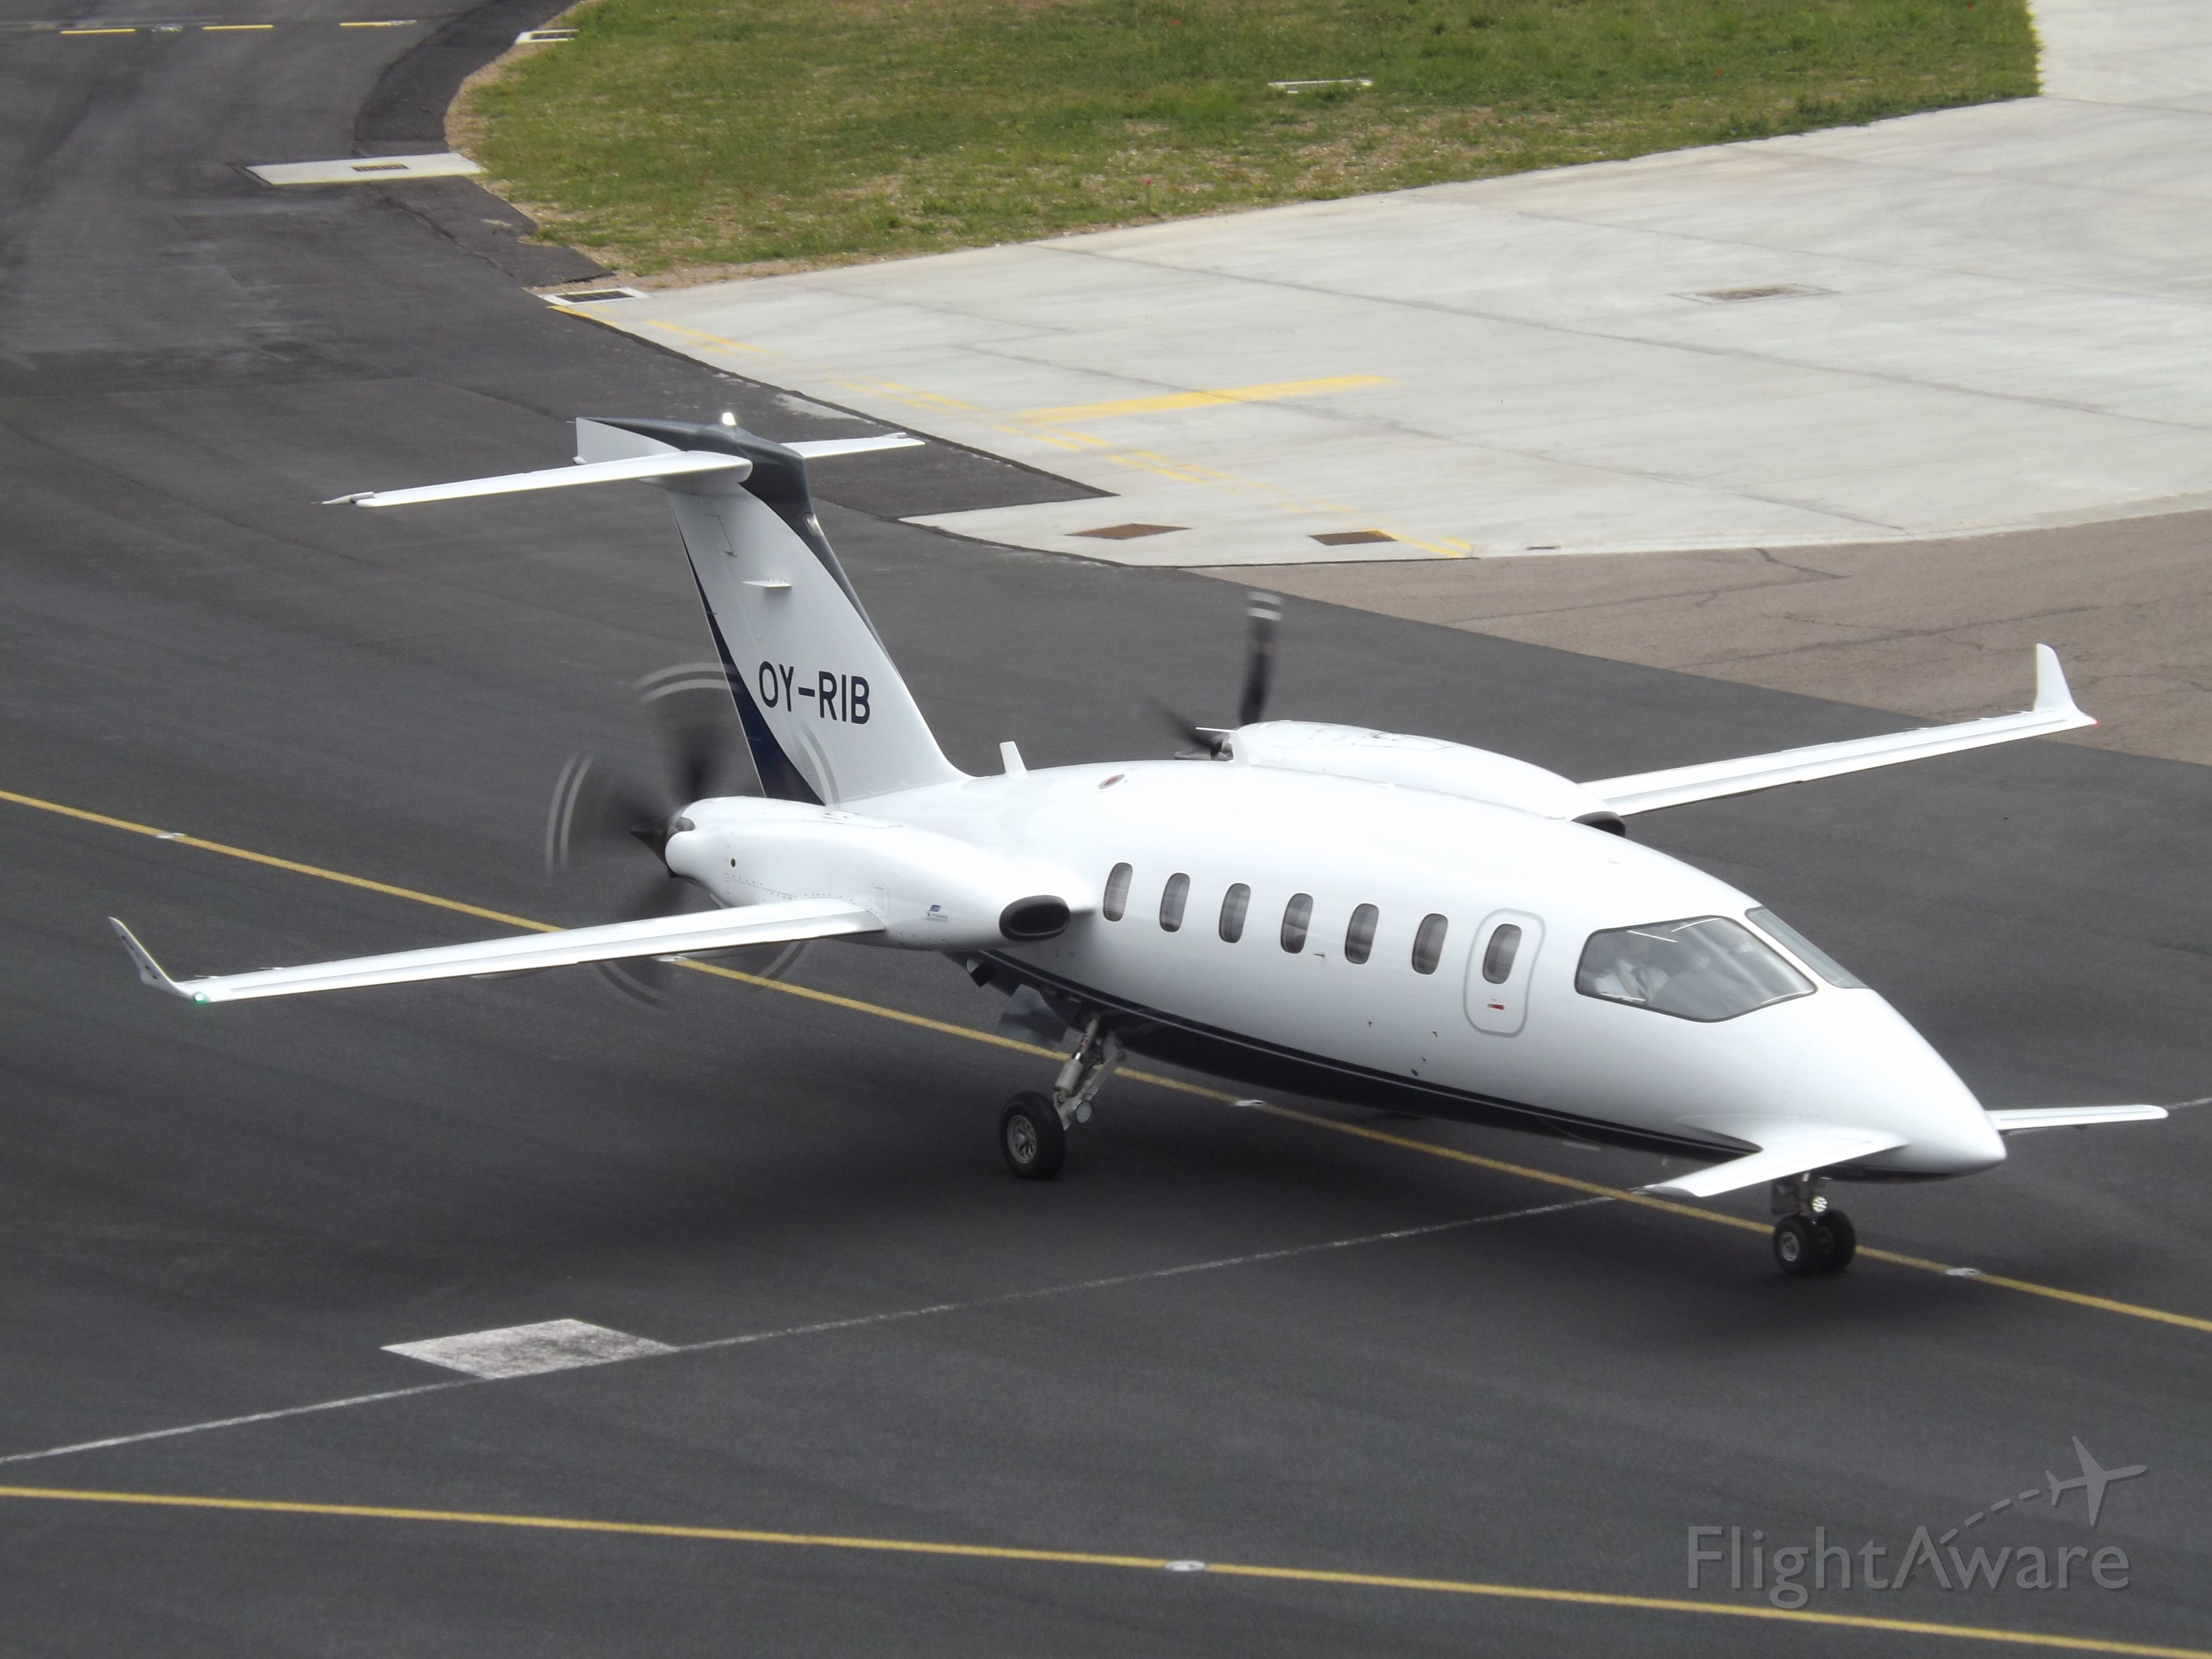 Piaggio P.180 Avanti (OY-RIB) - Taxing in at Luton Airport.